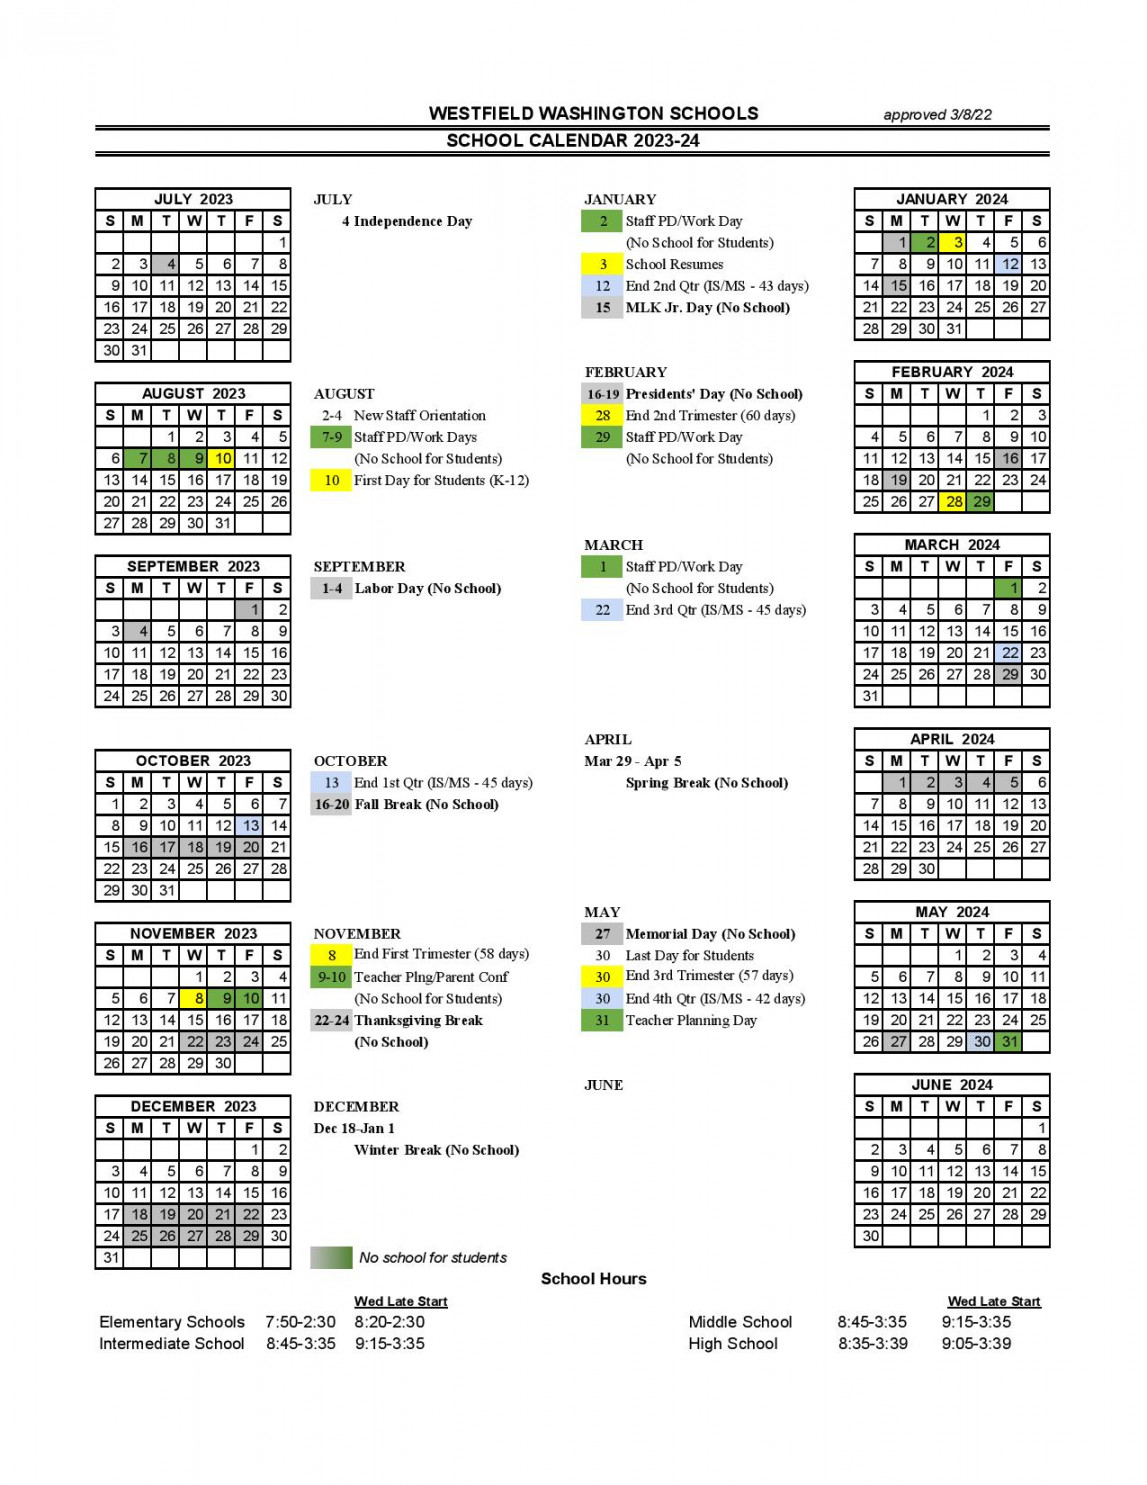 Westfield-Washington Schools Calendar - & Holidays